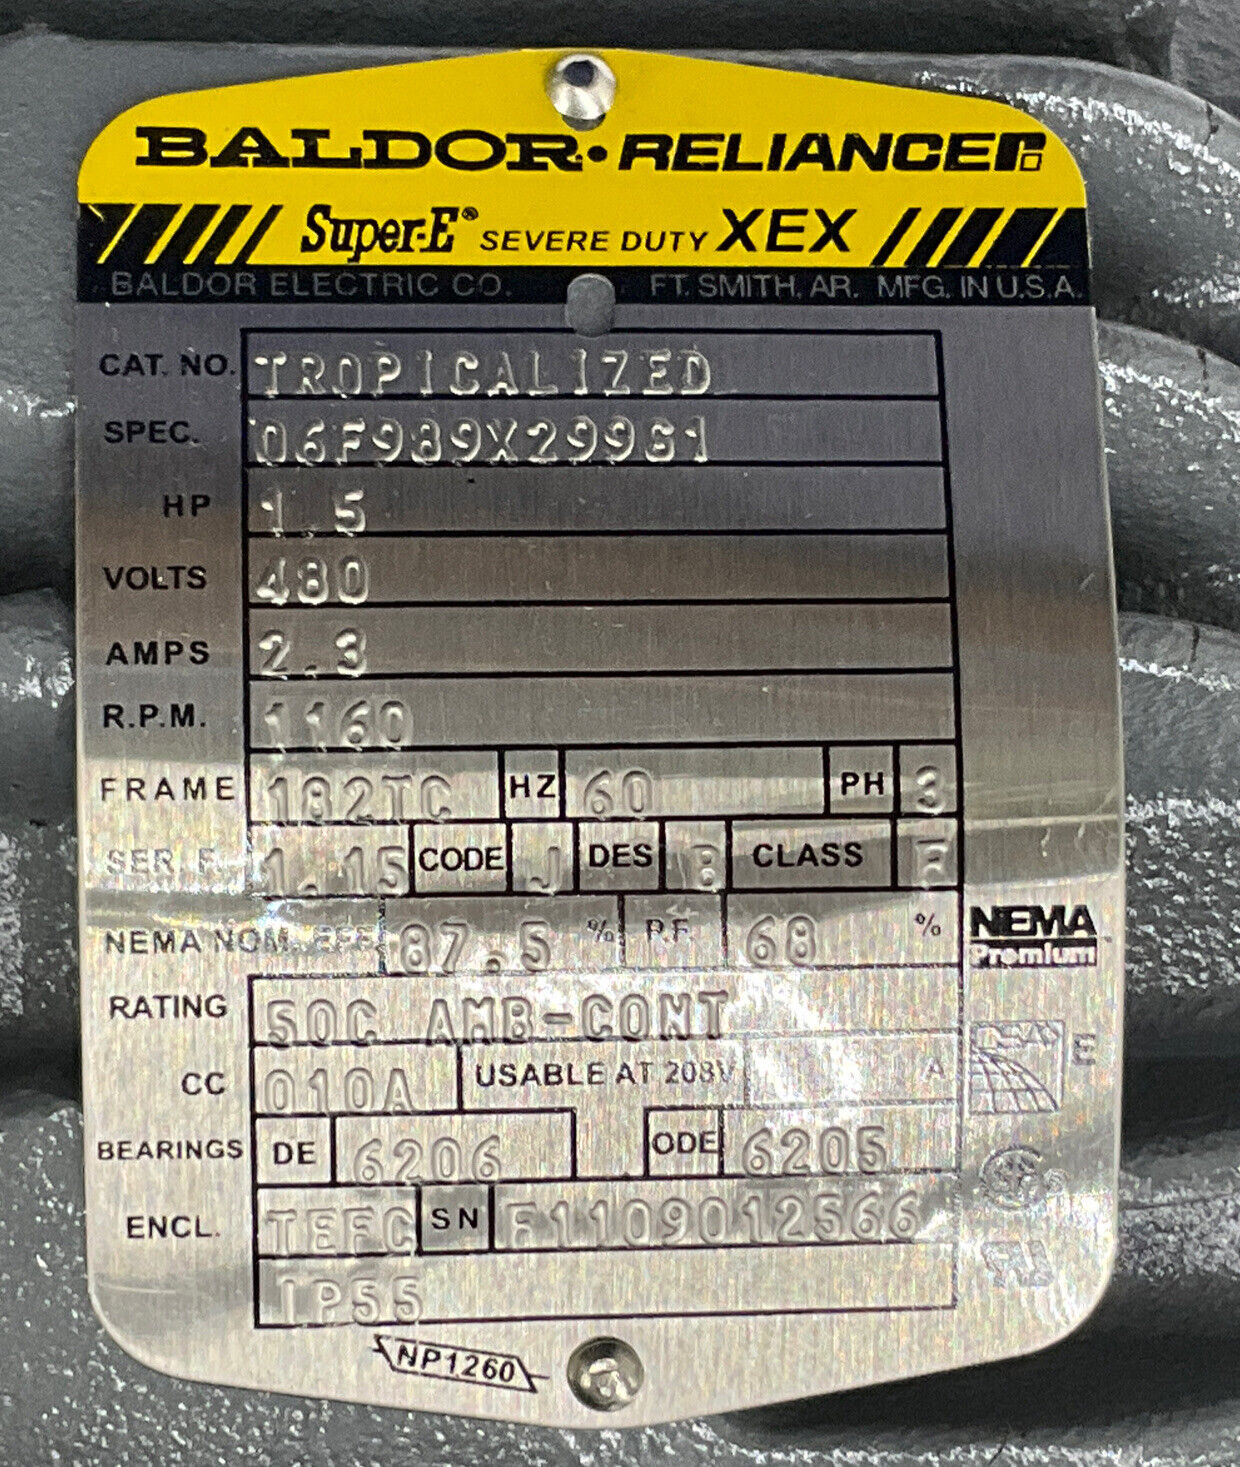 Baldor 06F989X299G1 1.5 HP Industrial Motor, 1160 RPM Frame 182TC, 480V (OV119) - 0